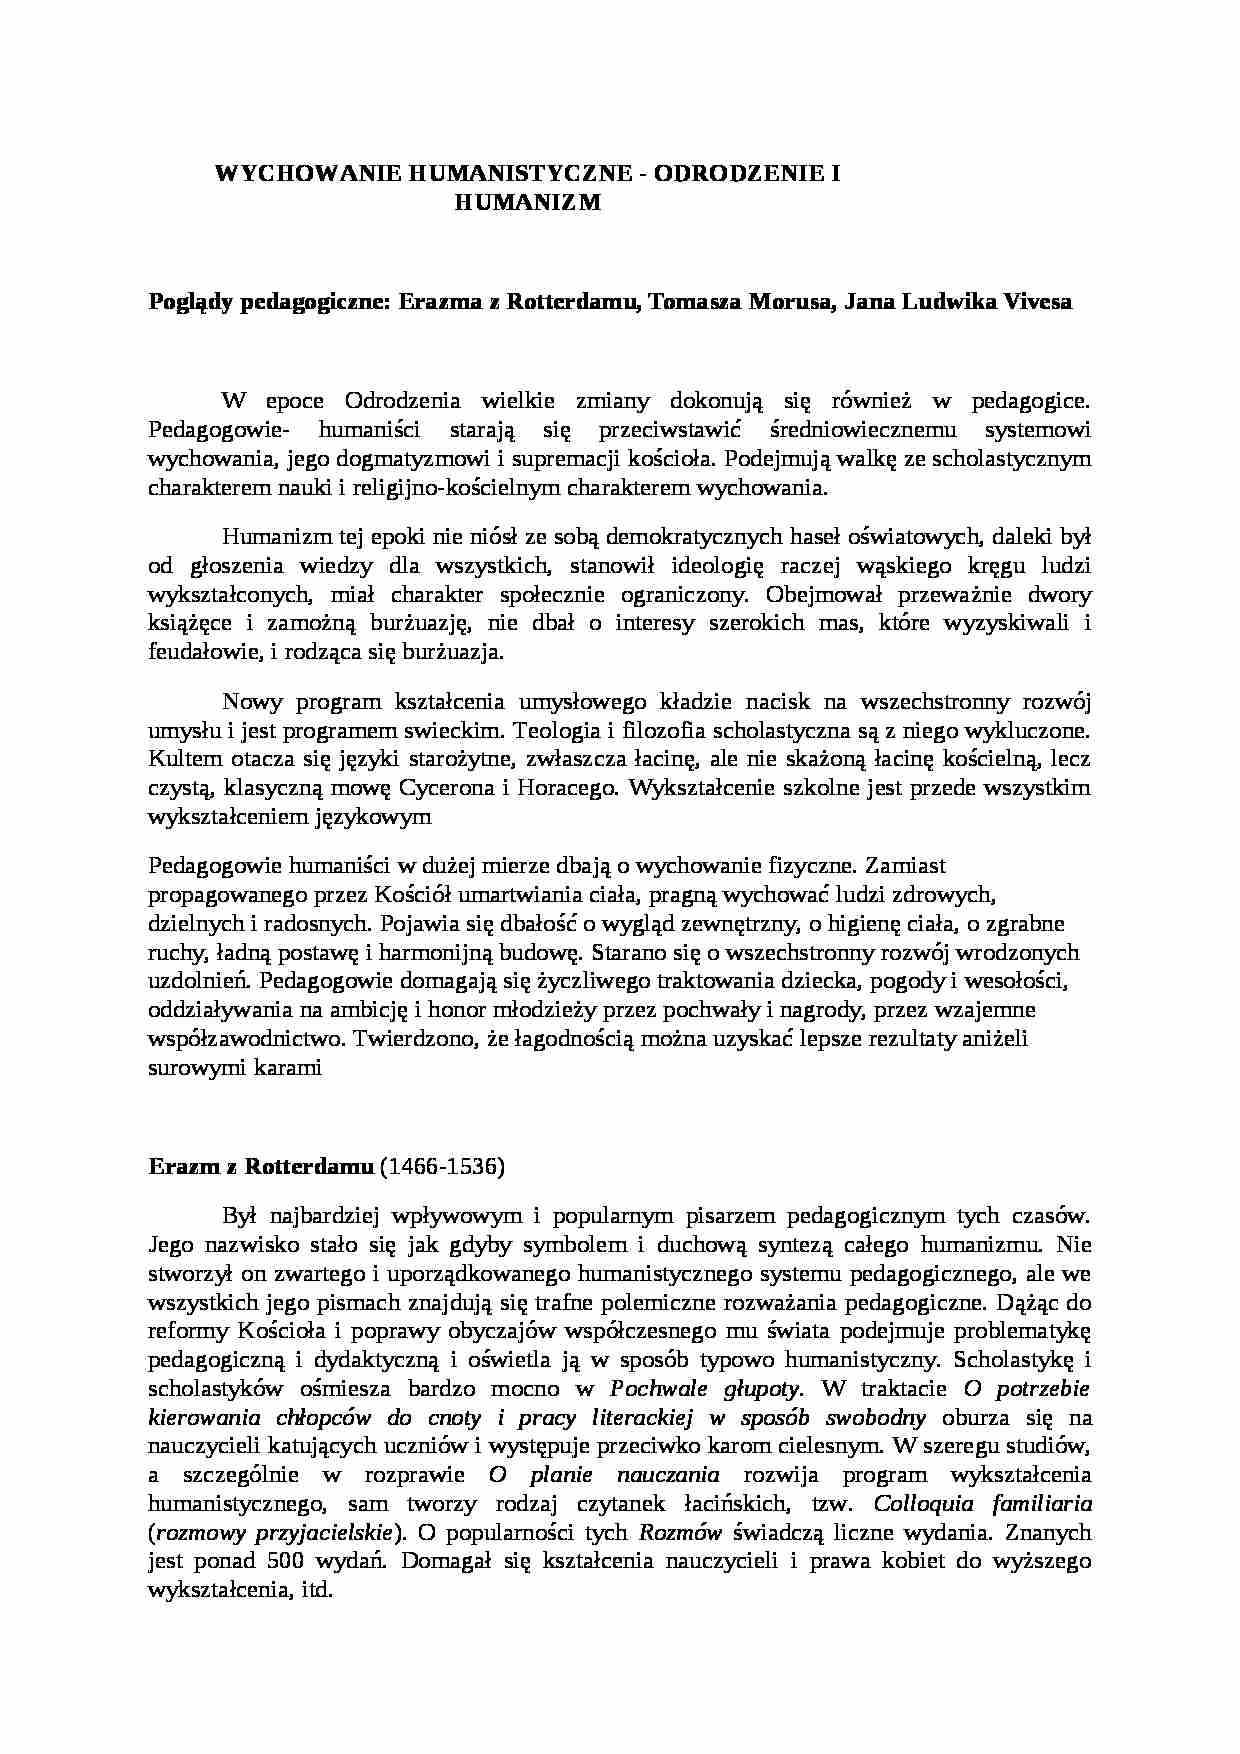 Poglądy pedagogiczne Erazma z Rotterdamu, Tomasza Morusa, Jana Ludwika Vivesa- pedagogika - strona 1